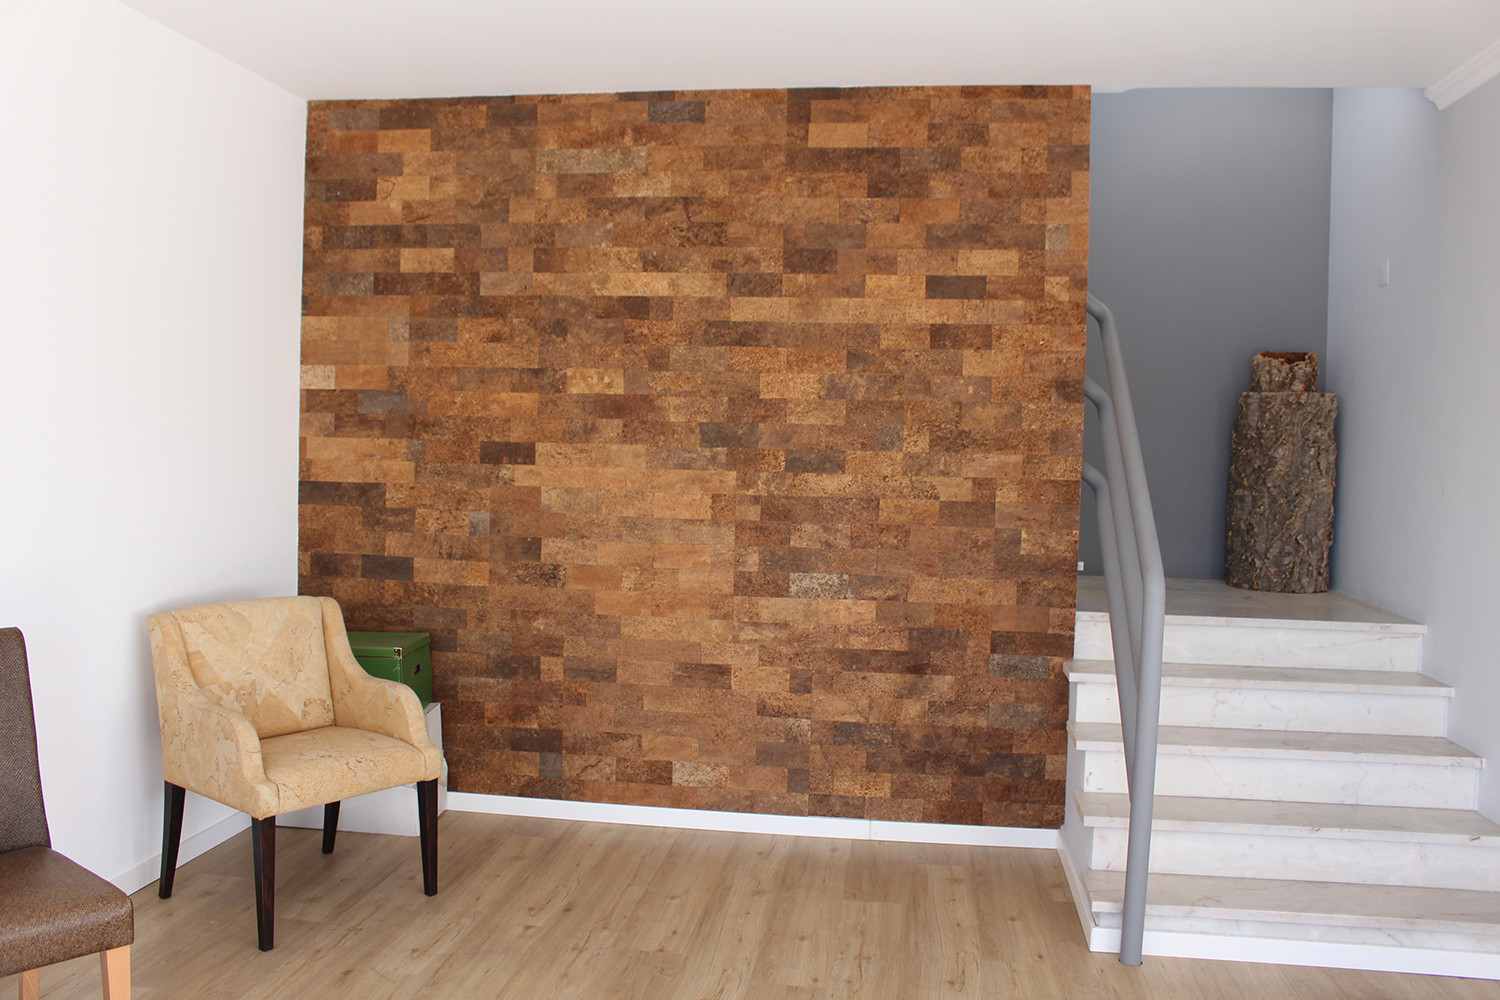  Wall Cork Tiles